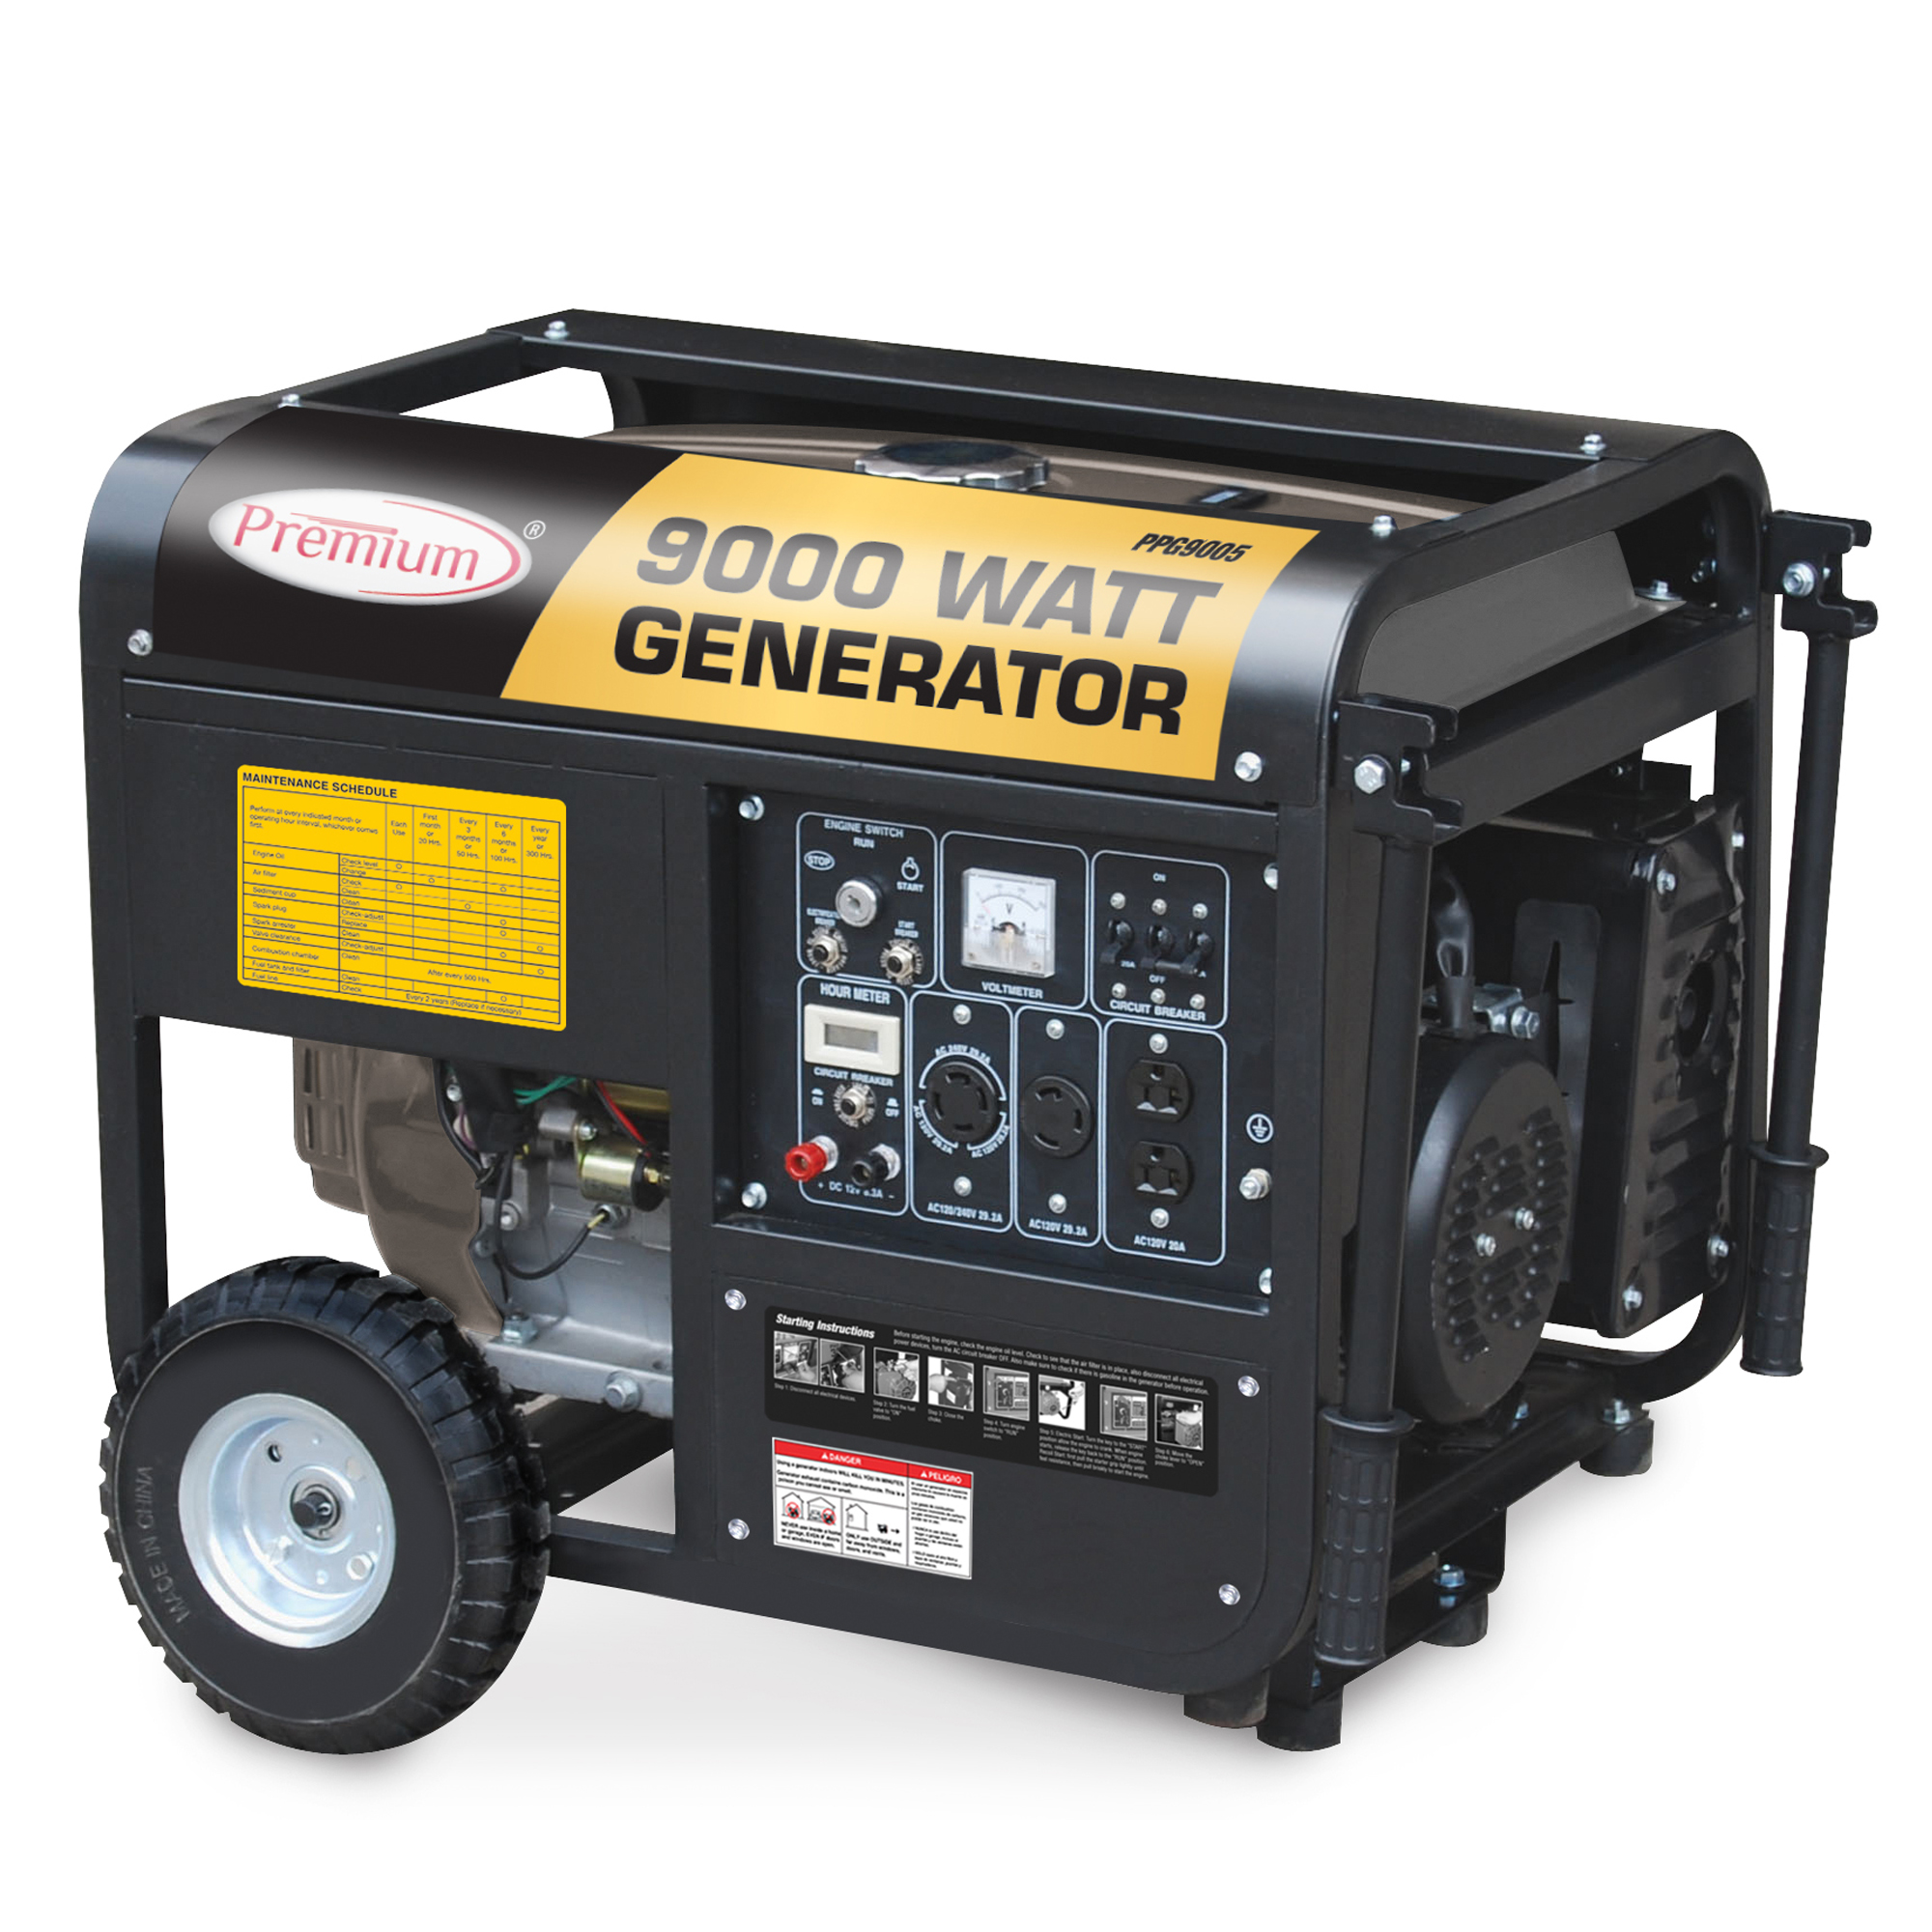 Генератор повер. Лог 6000 Генератор премиум. Binshi Power Генератор. Leader swemar Generator lsw-480. Car Generator Production.